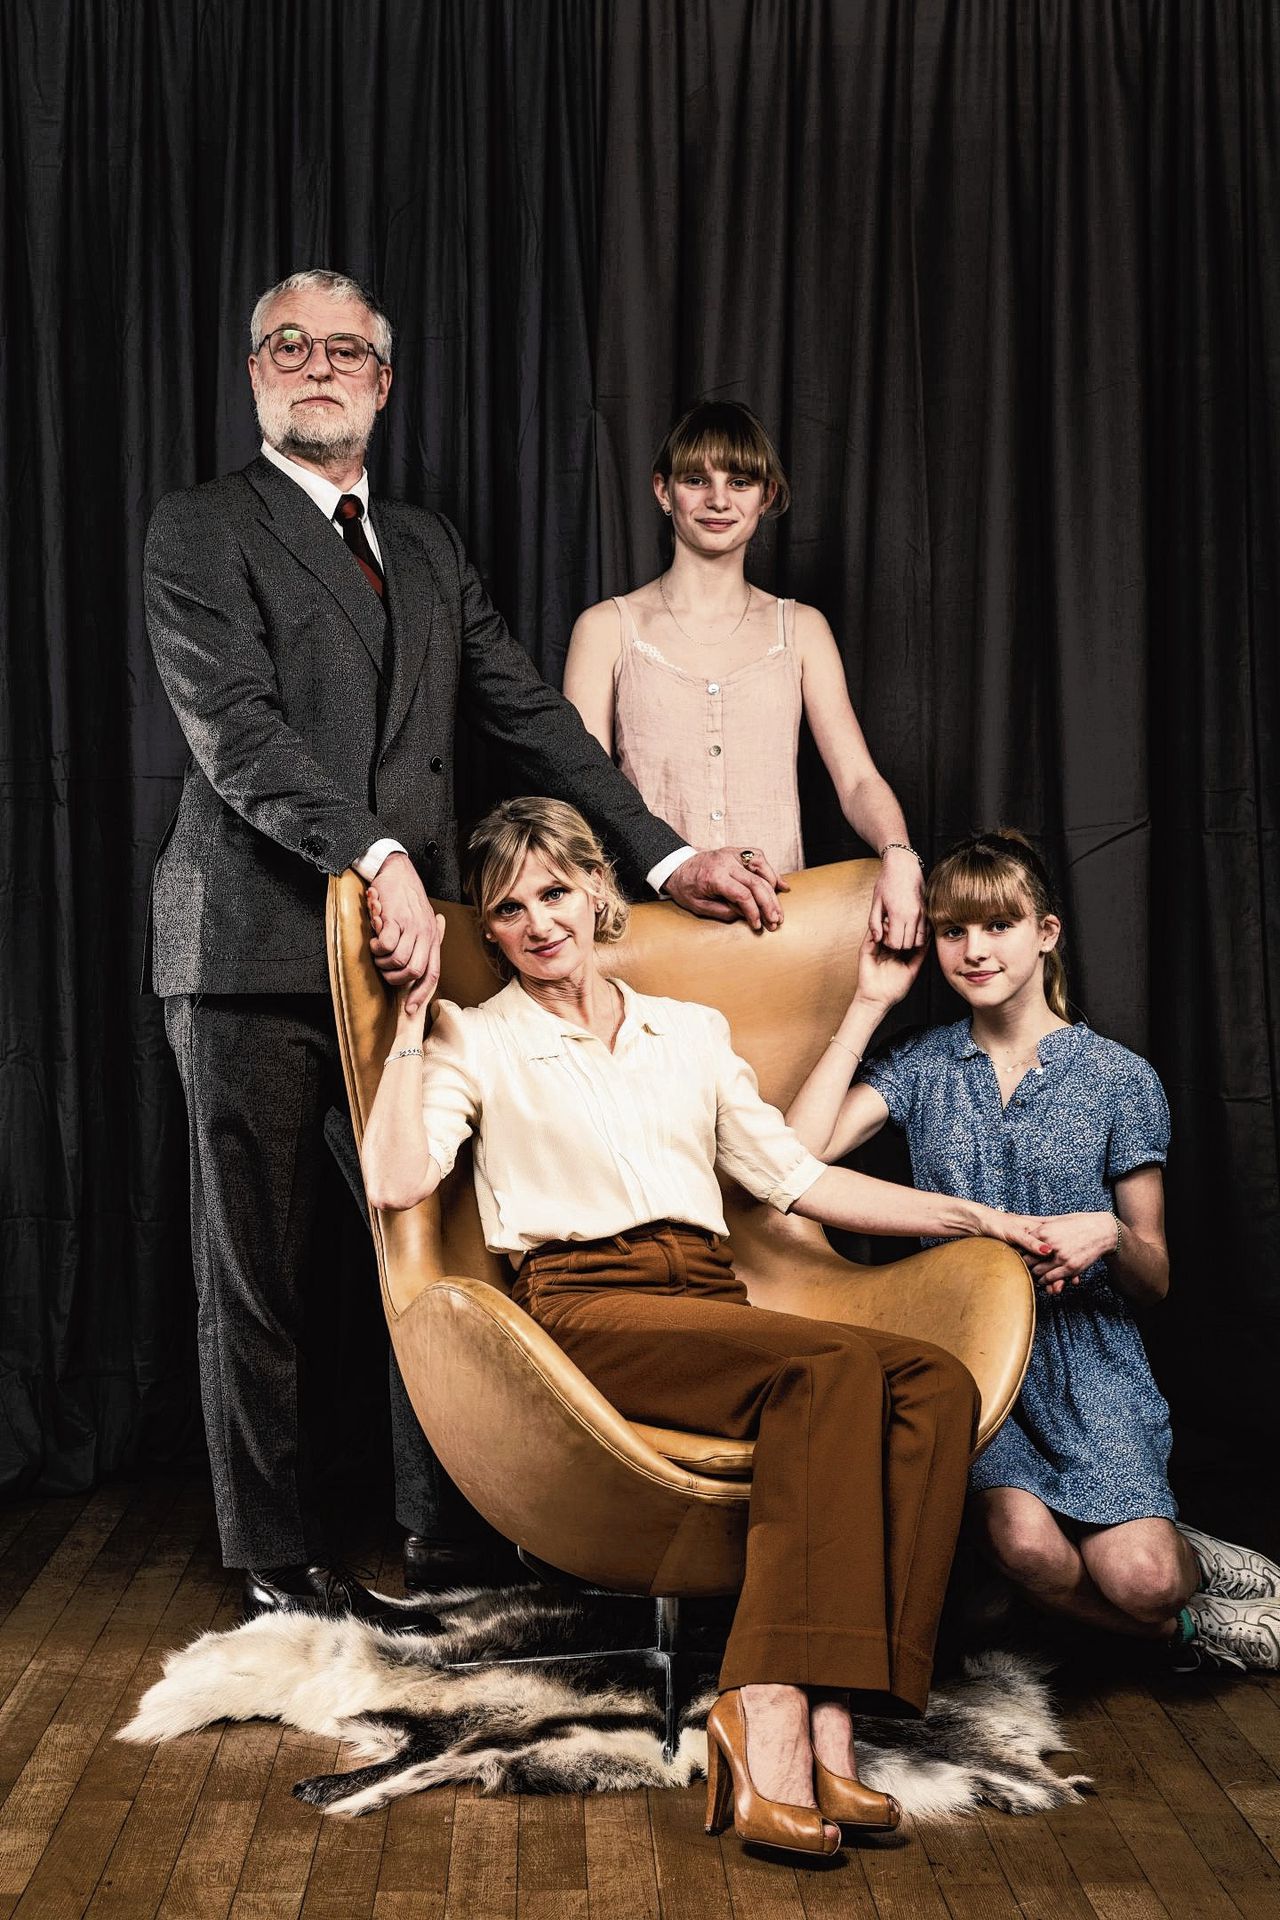 Acteurskoppel An Miller en Filip Peeters met hun twee tienerdochters Louisa en Leonce in Familie.